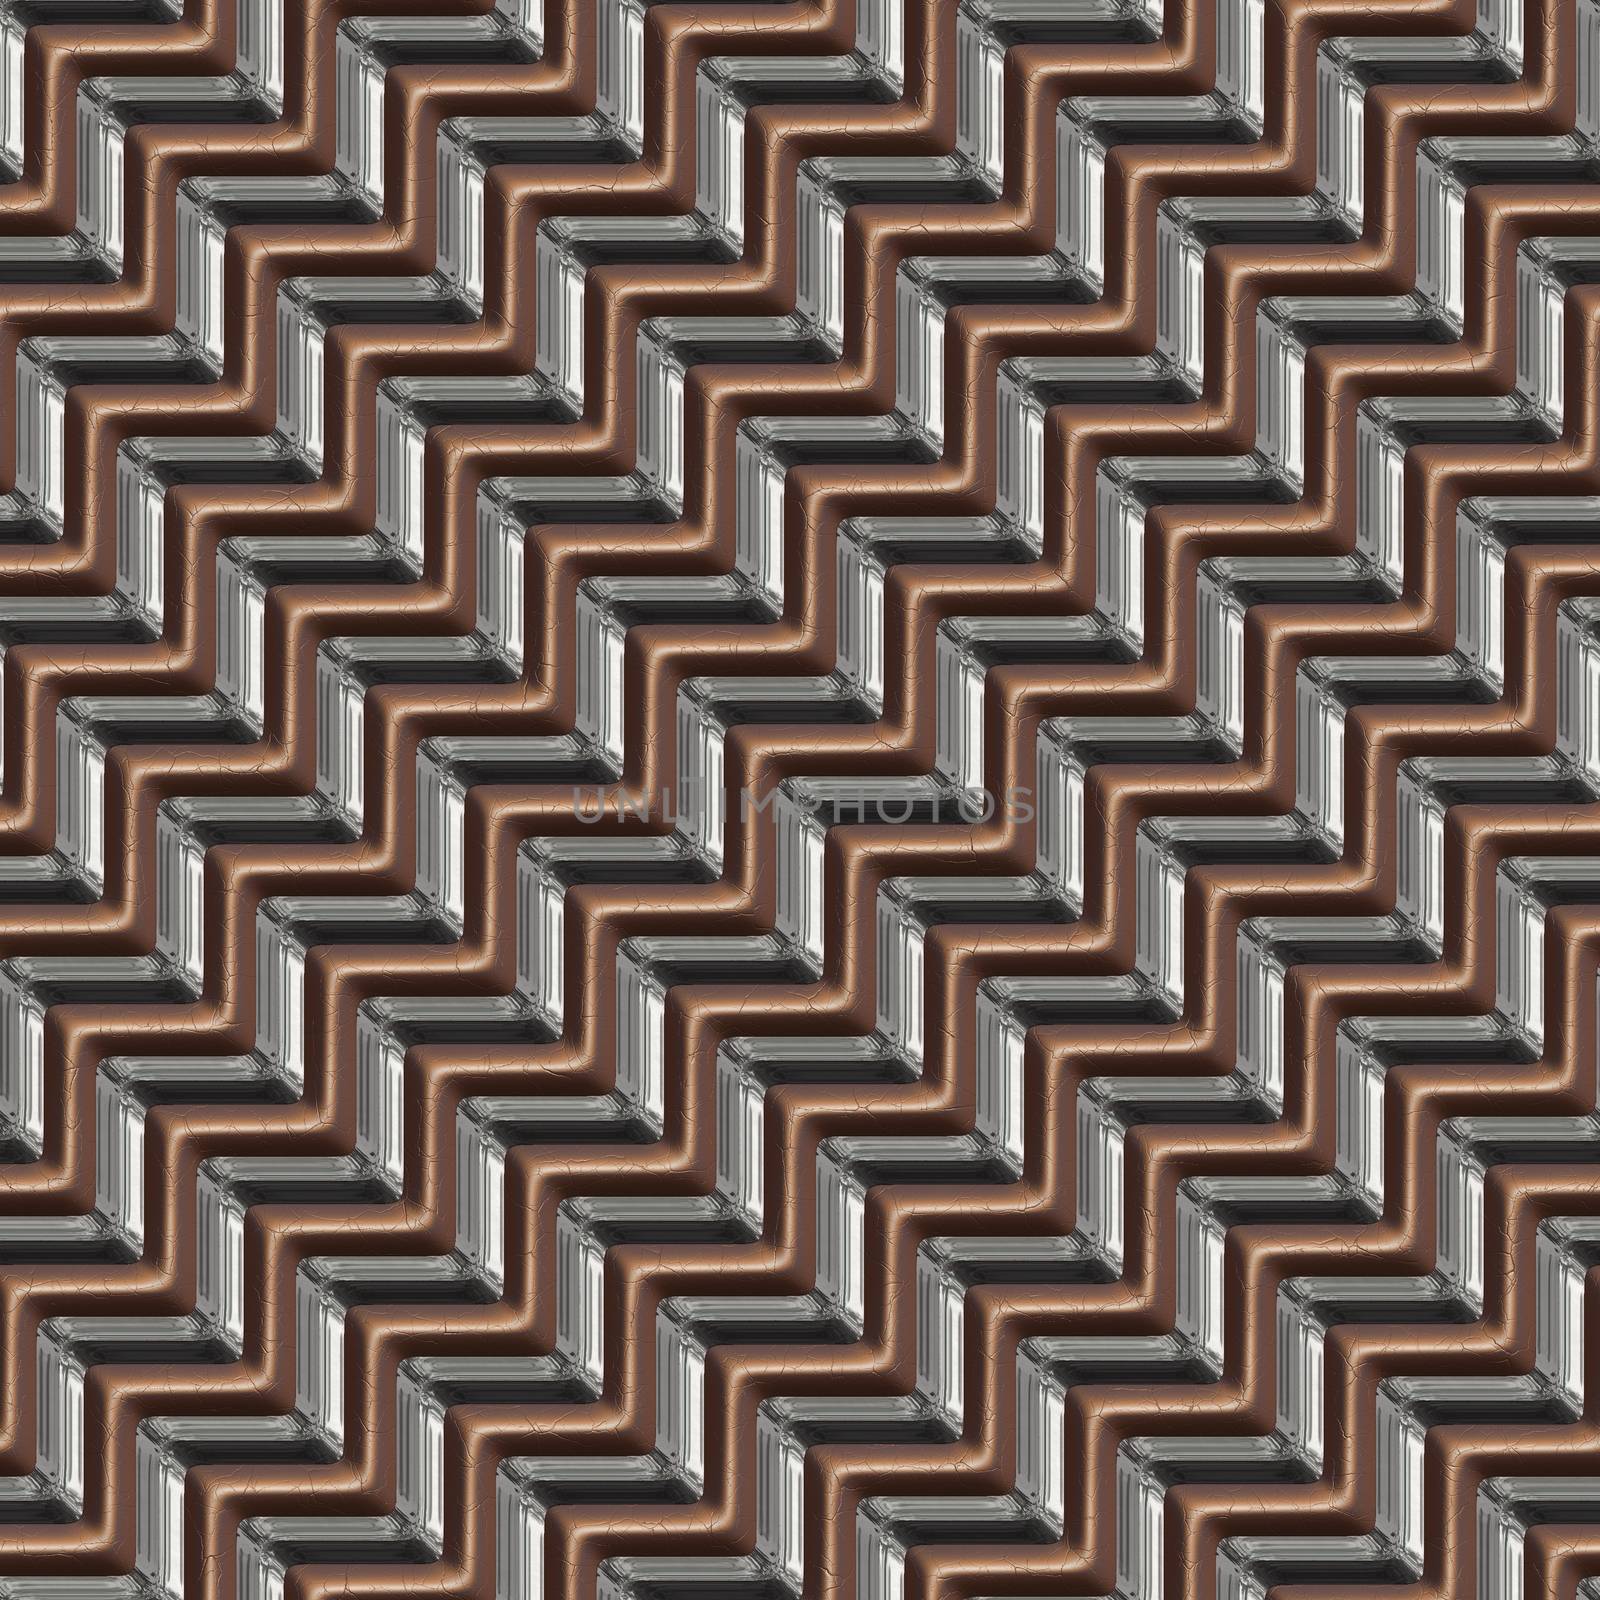 3d seamless tile decorative background pattern.